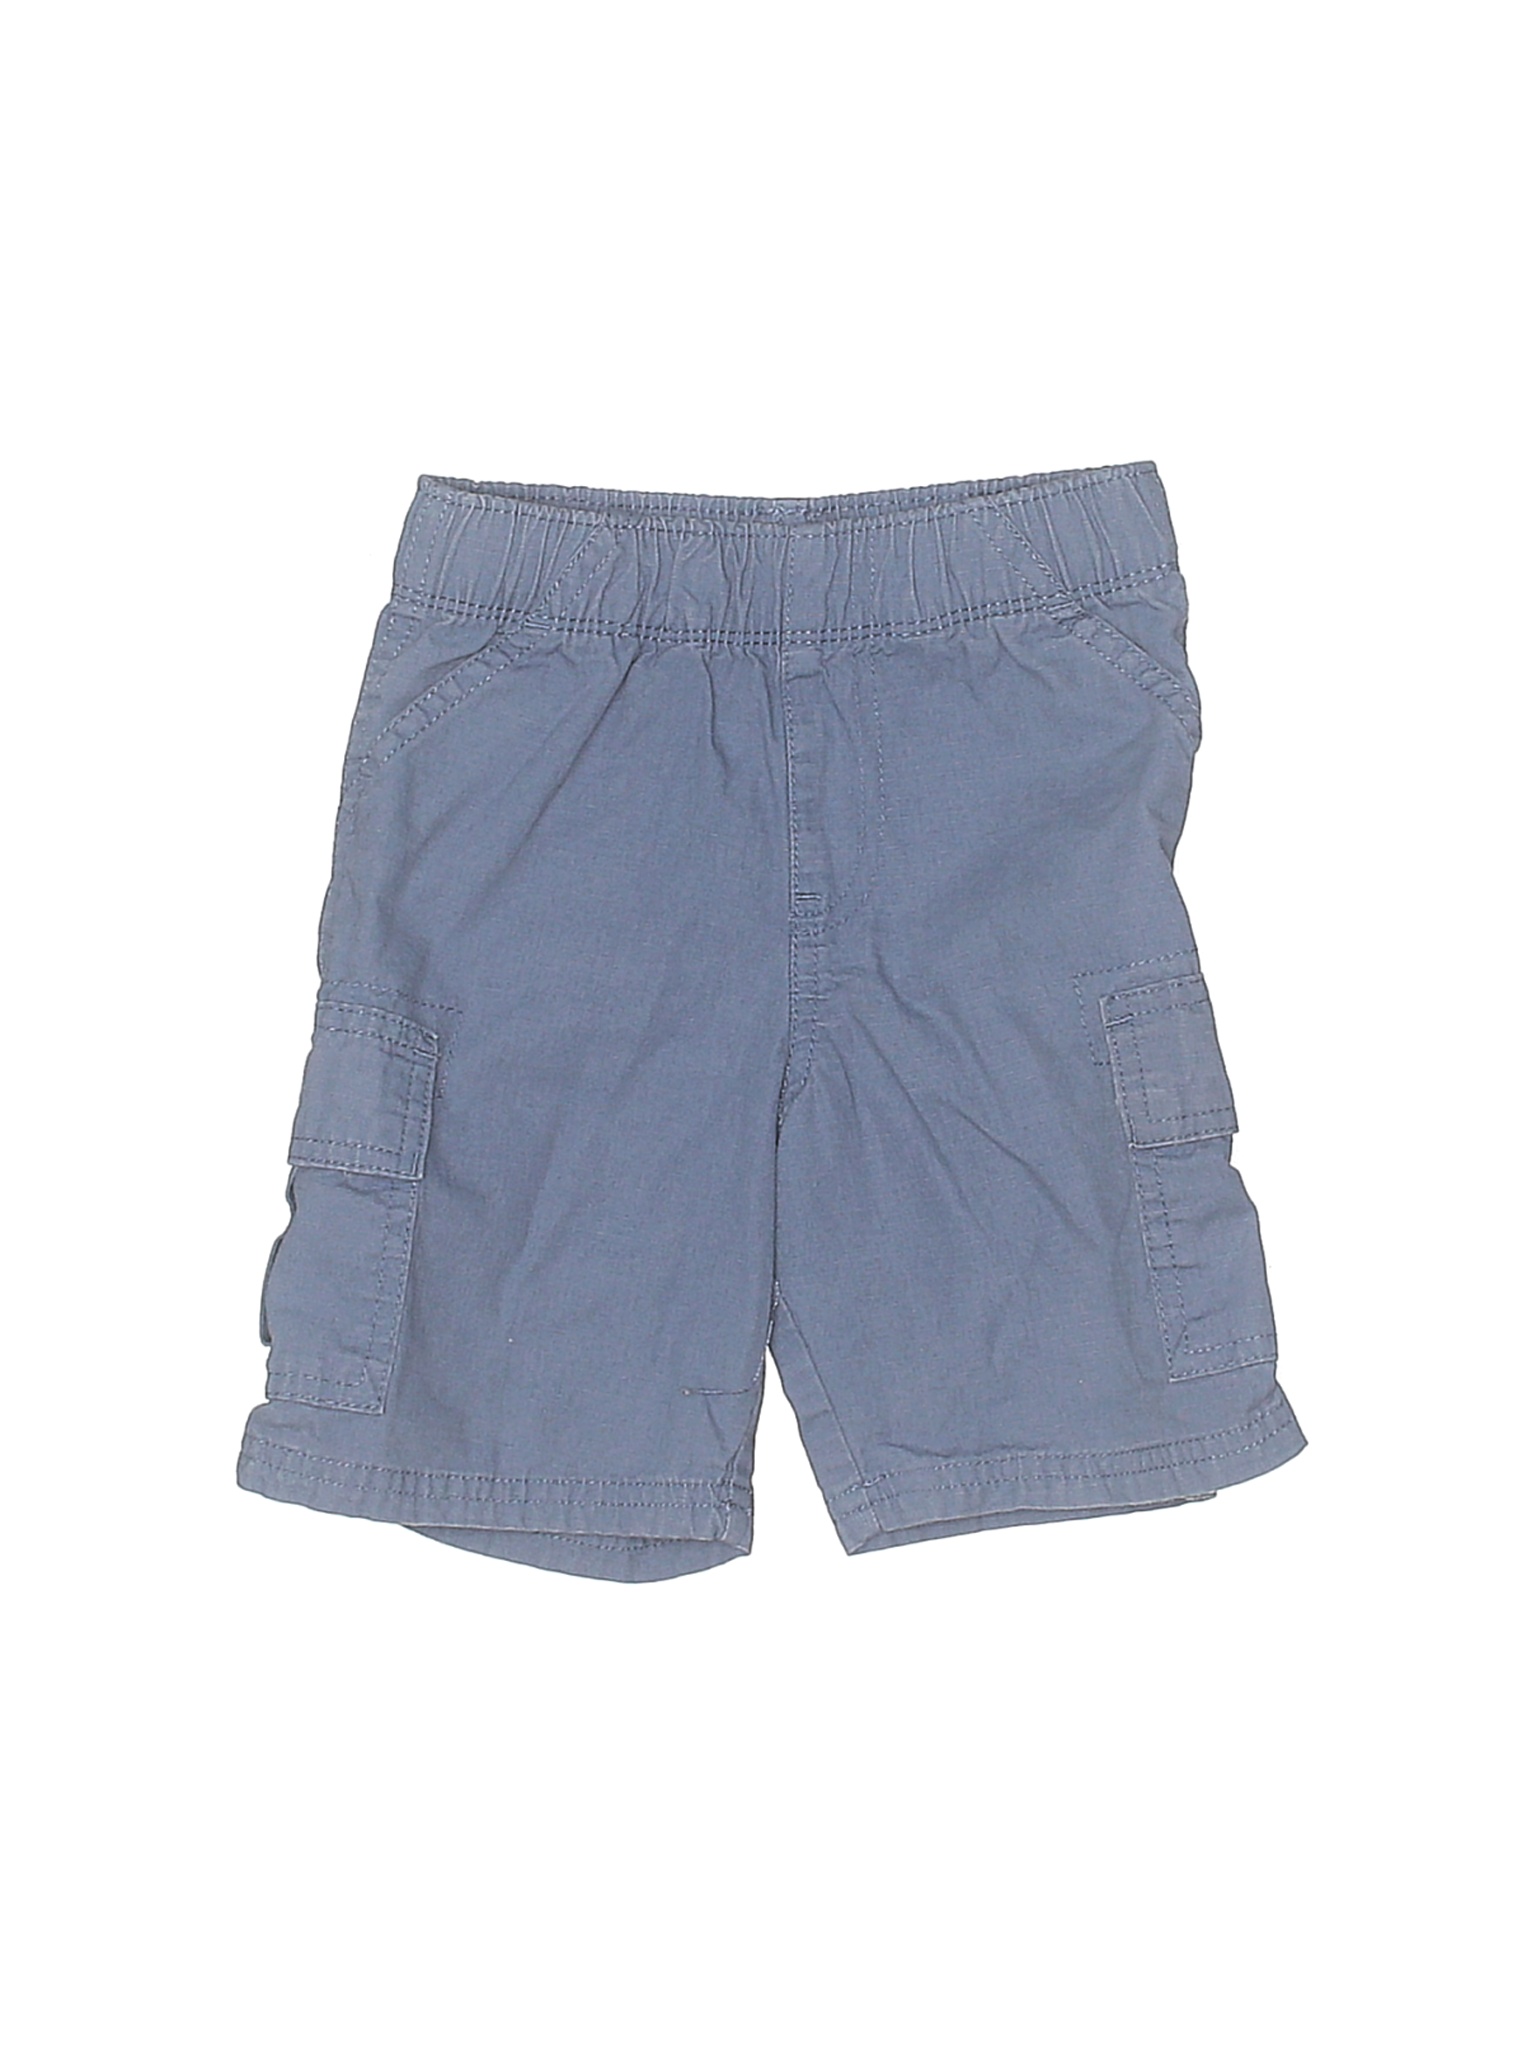 The Children's Place Boys Blue Shorts 3T | eBay